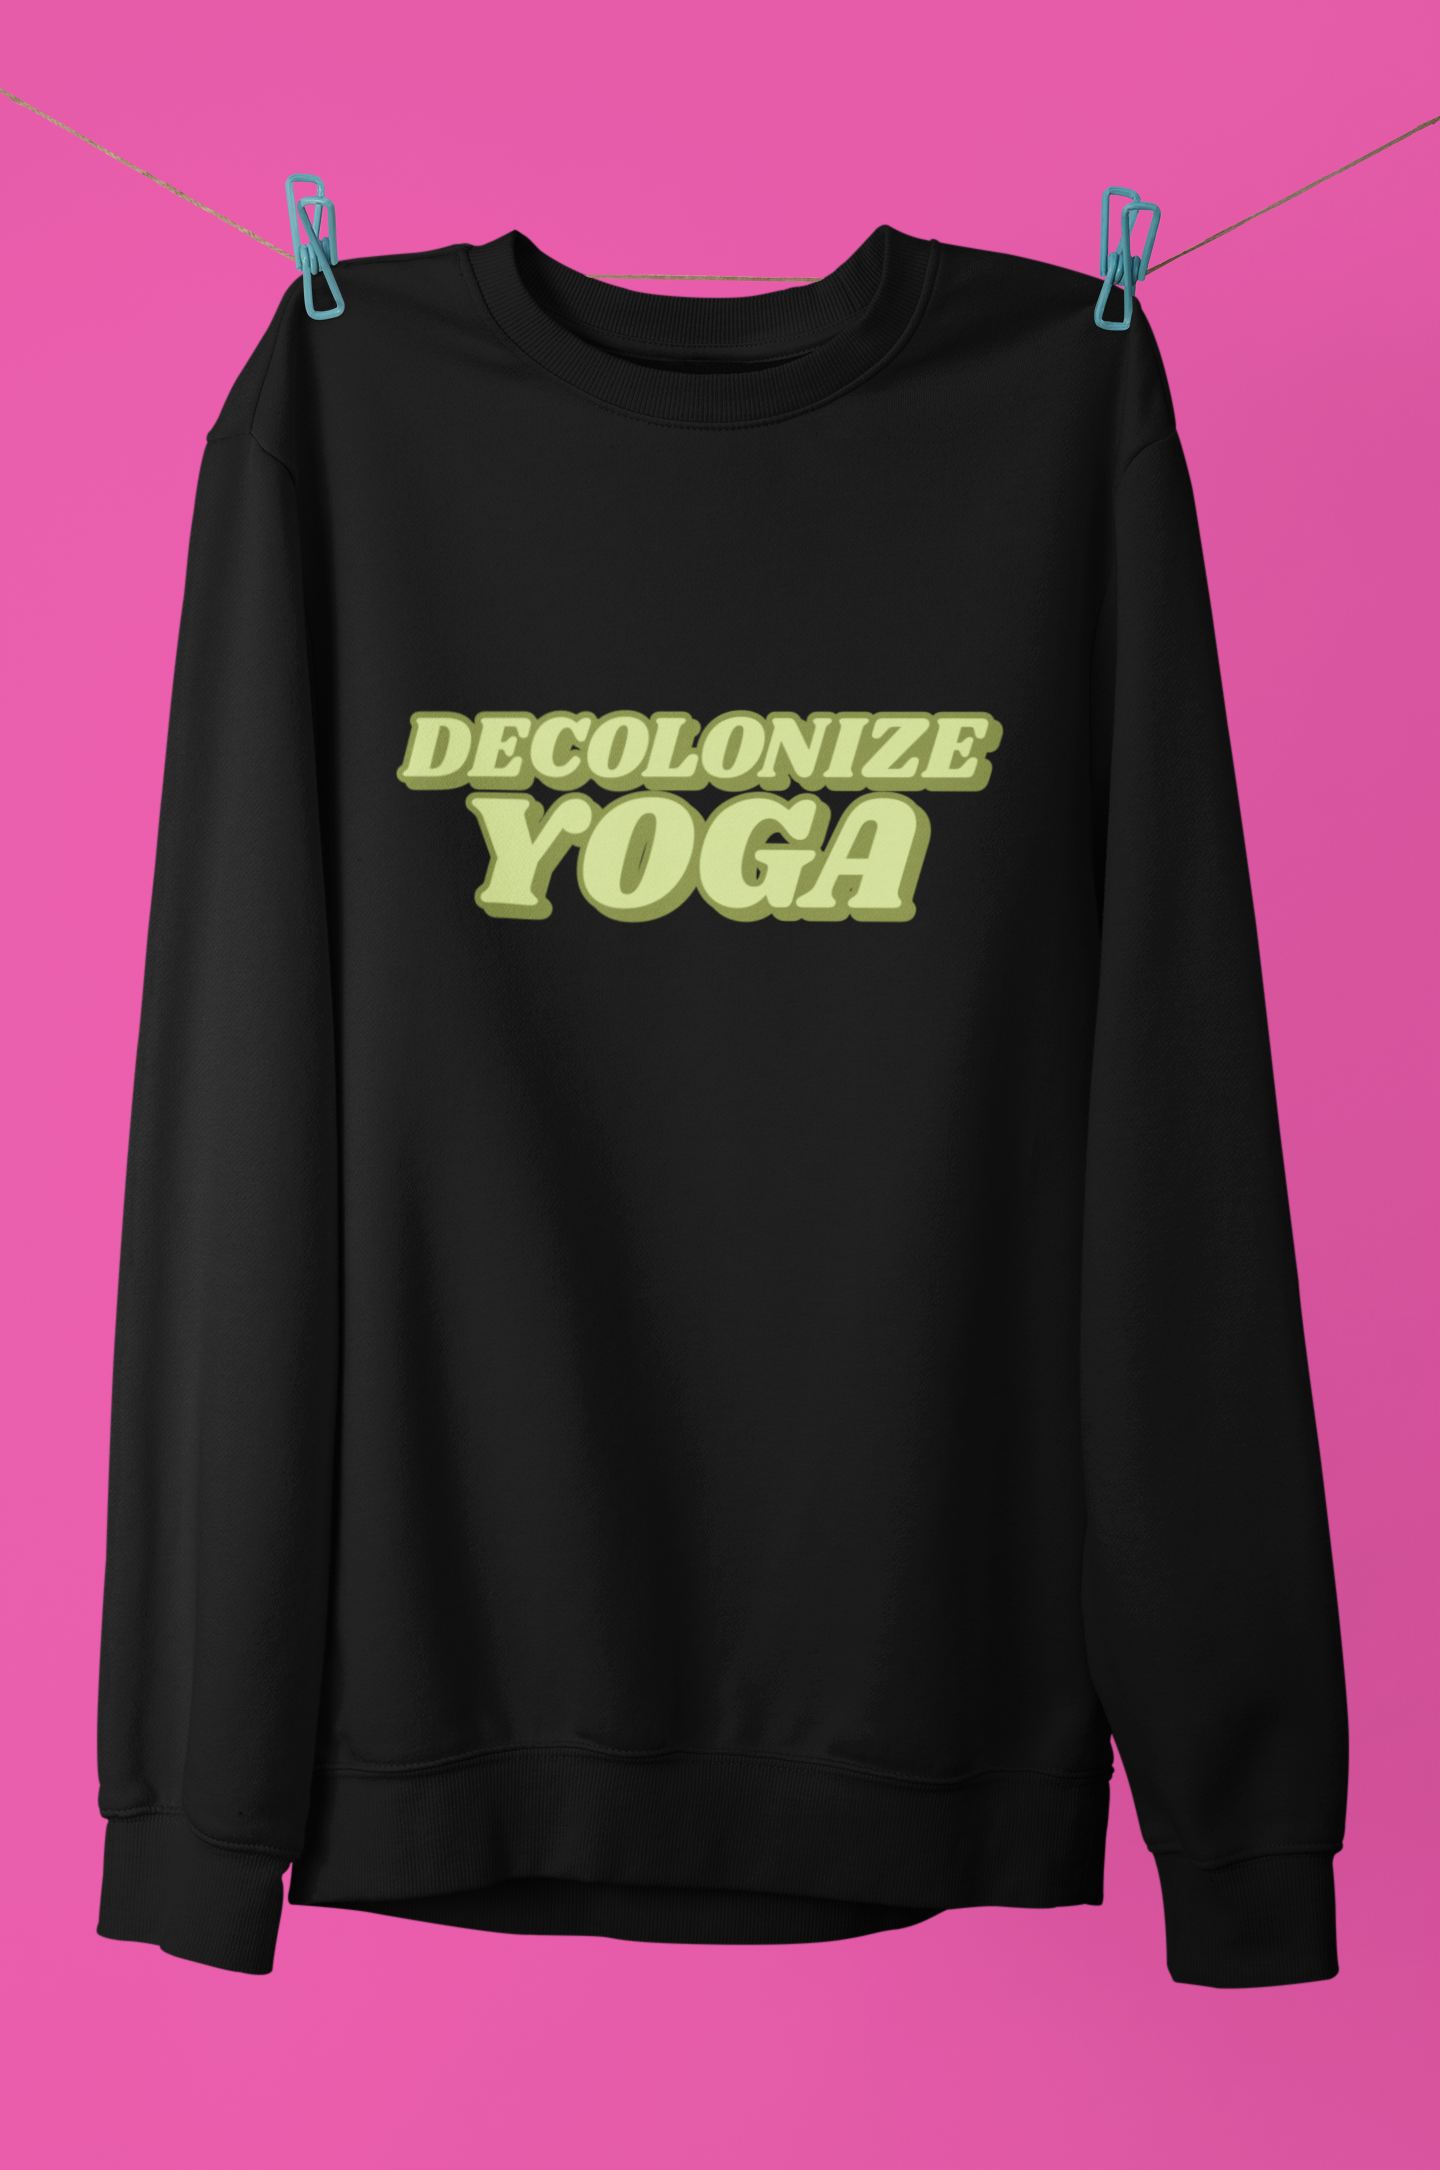 The Decolonize Sweatshirt